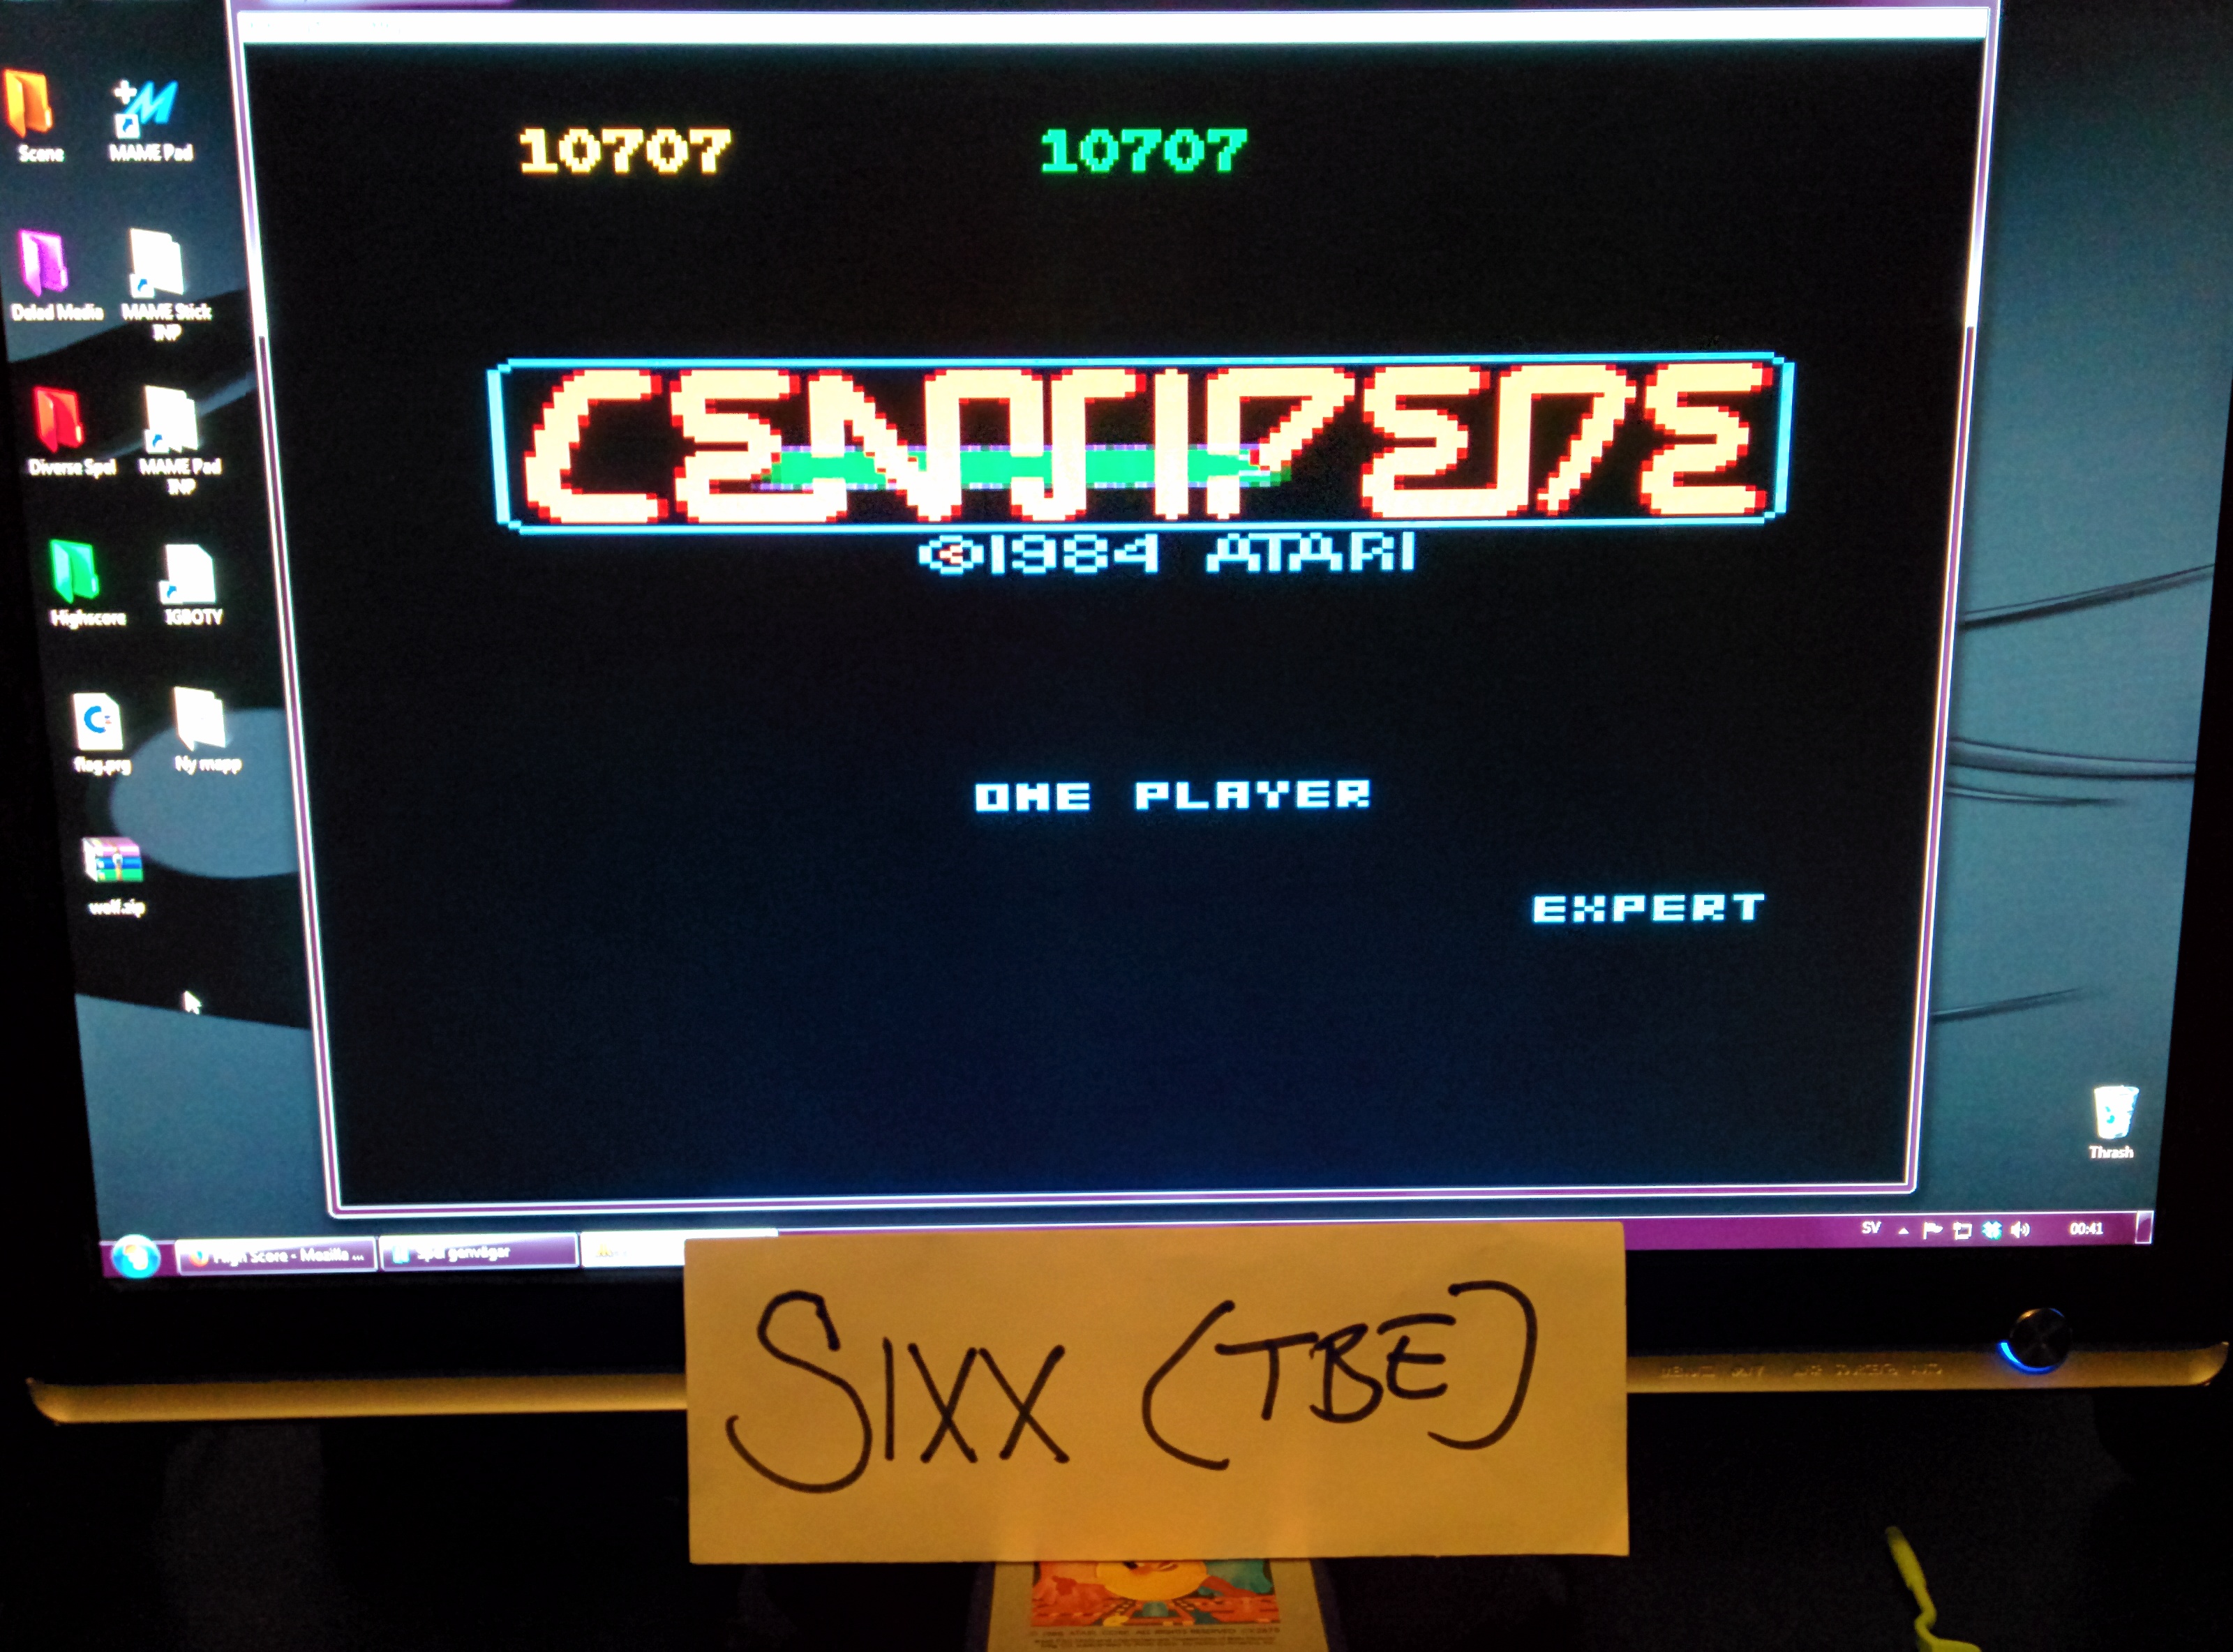 Sixx: Centipede: Expert (Atari 7800 Emulated) 10,707 points on 2014-07-13 16:43:30